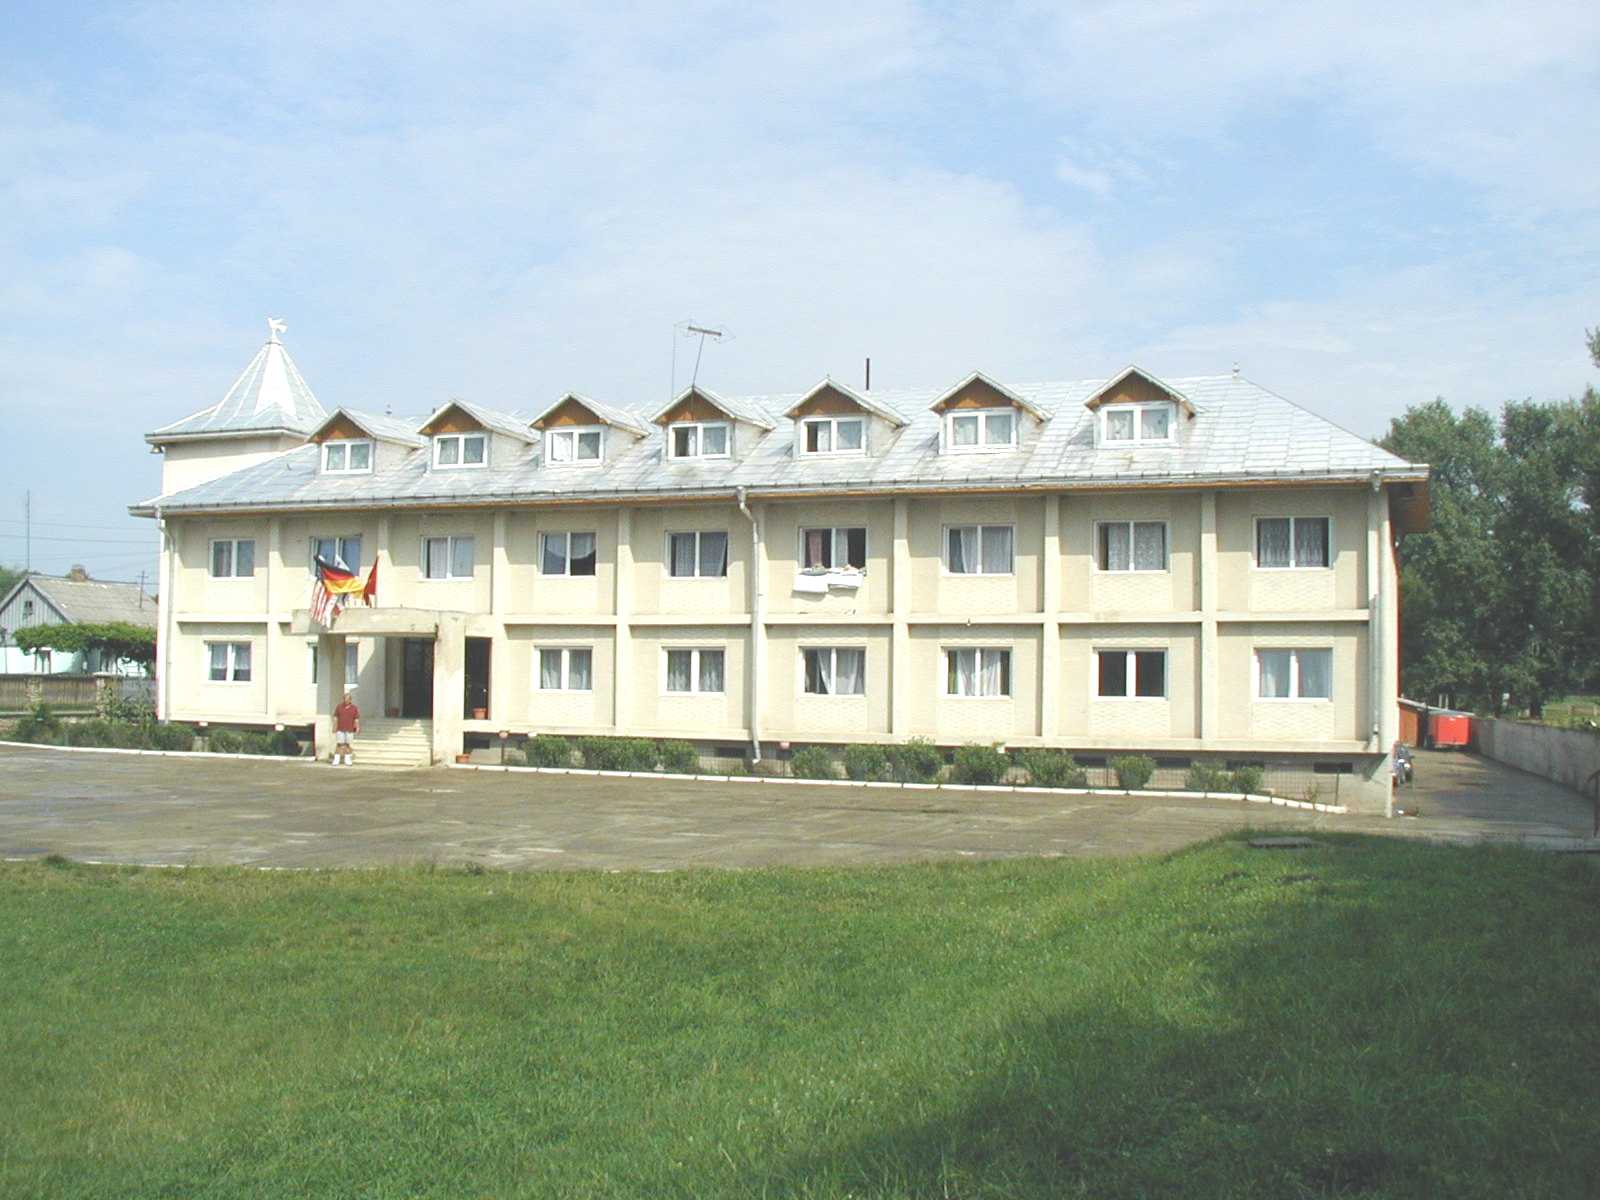 The orphanage at Dornesti.